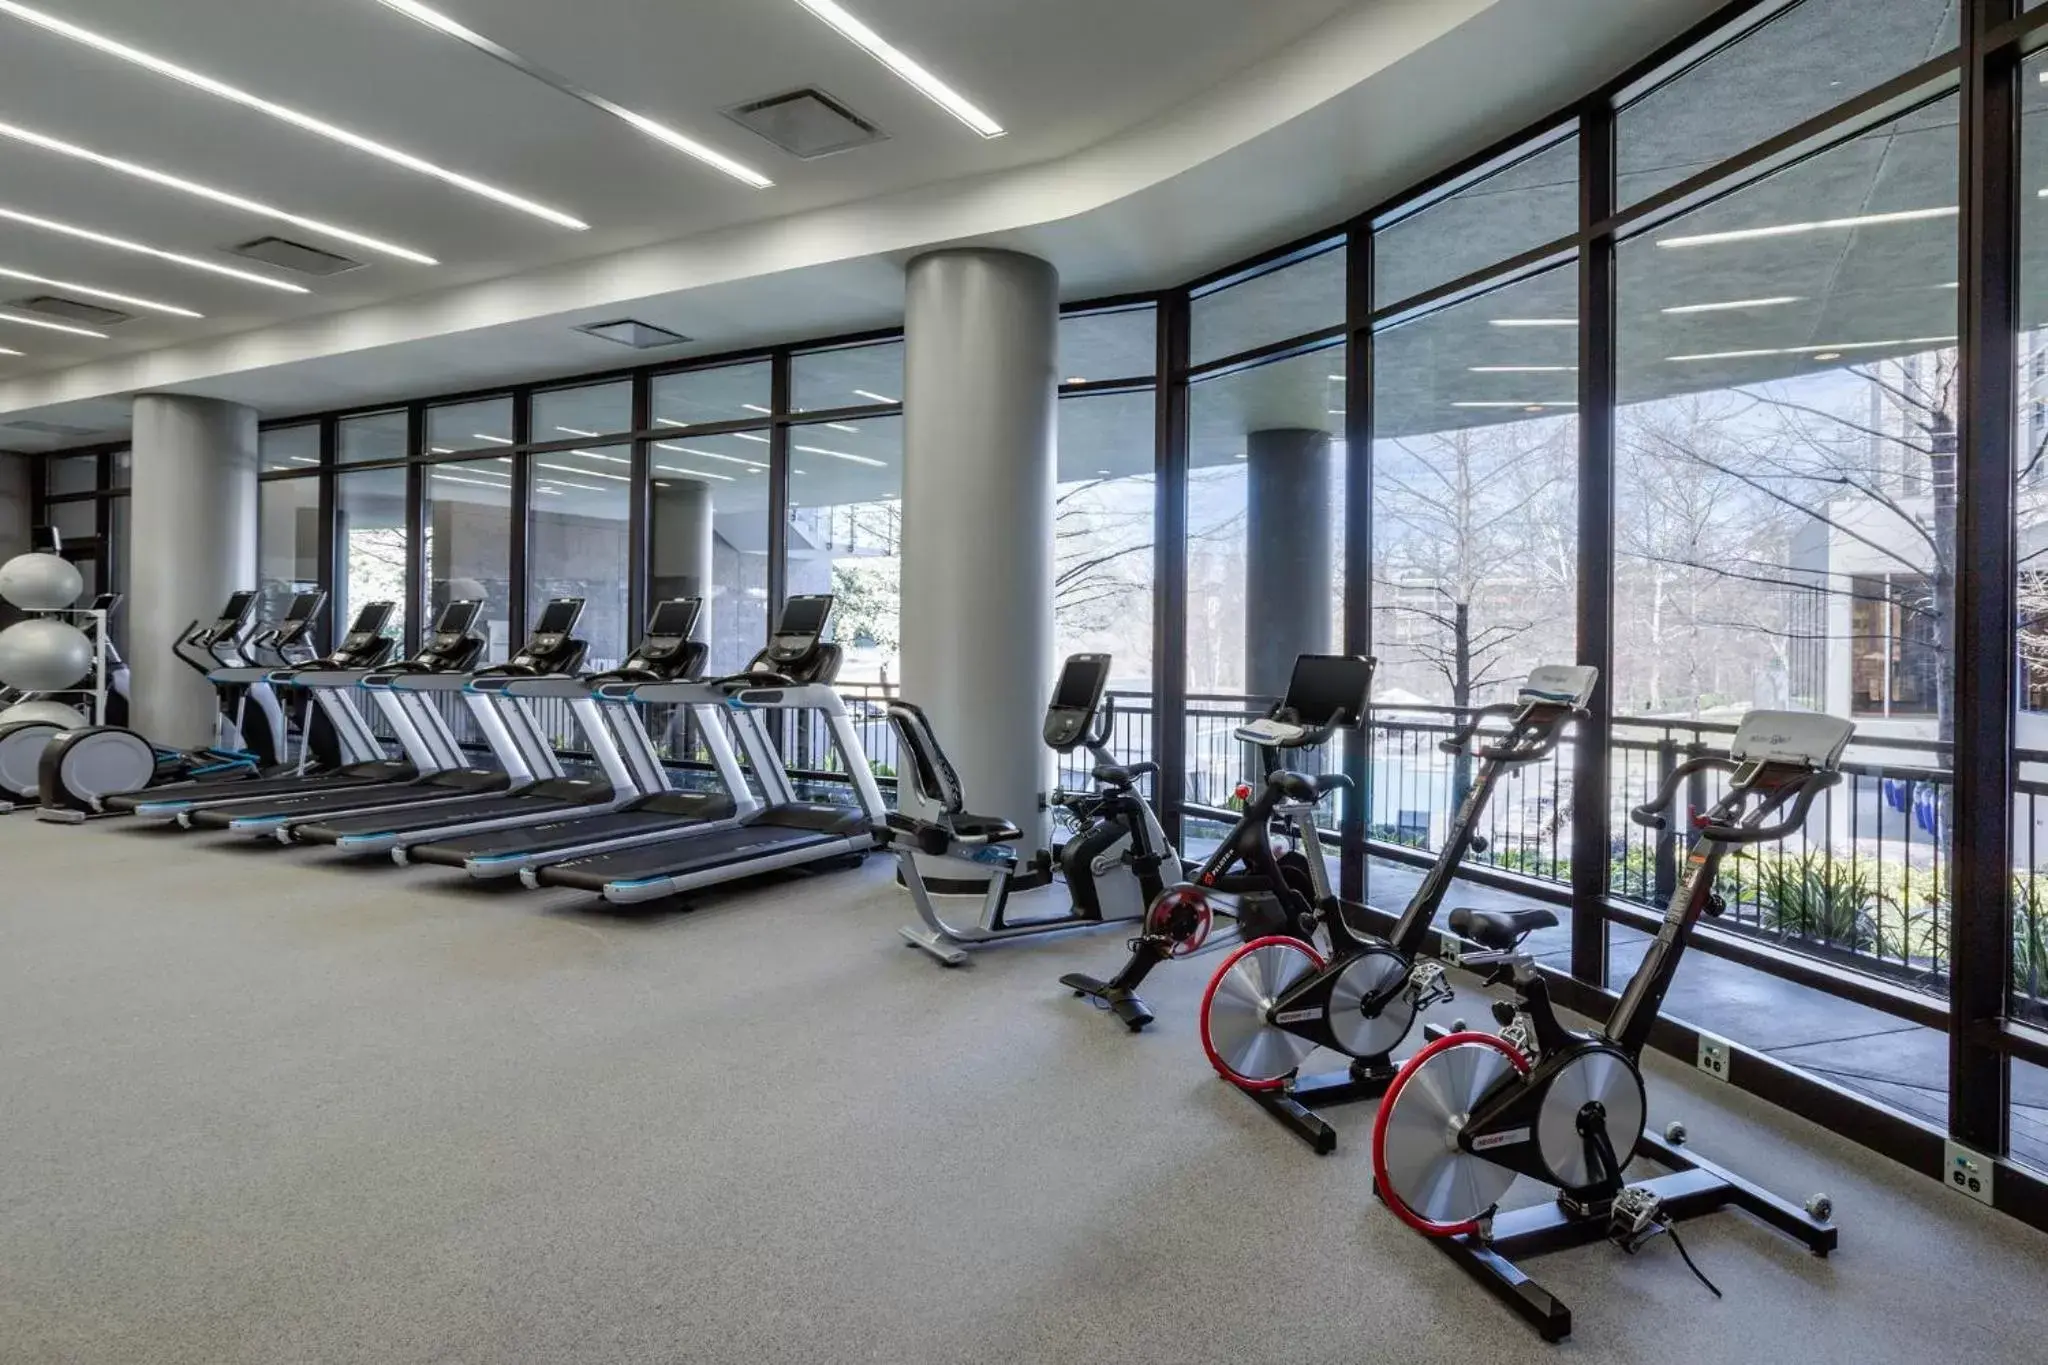 Fitness centre/facilities, Fitness Center/Facilities in Omni Houston Hotel